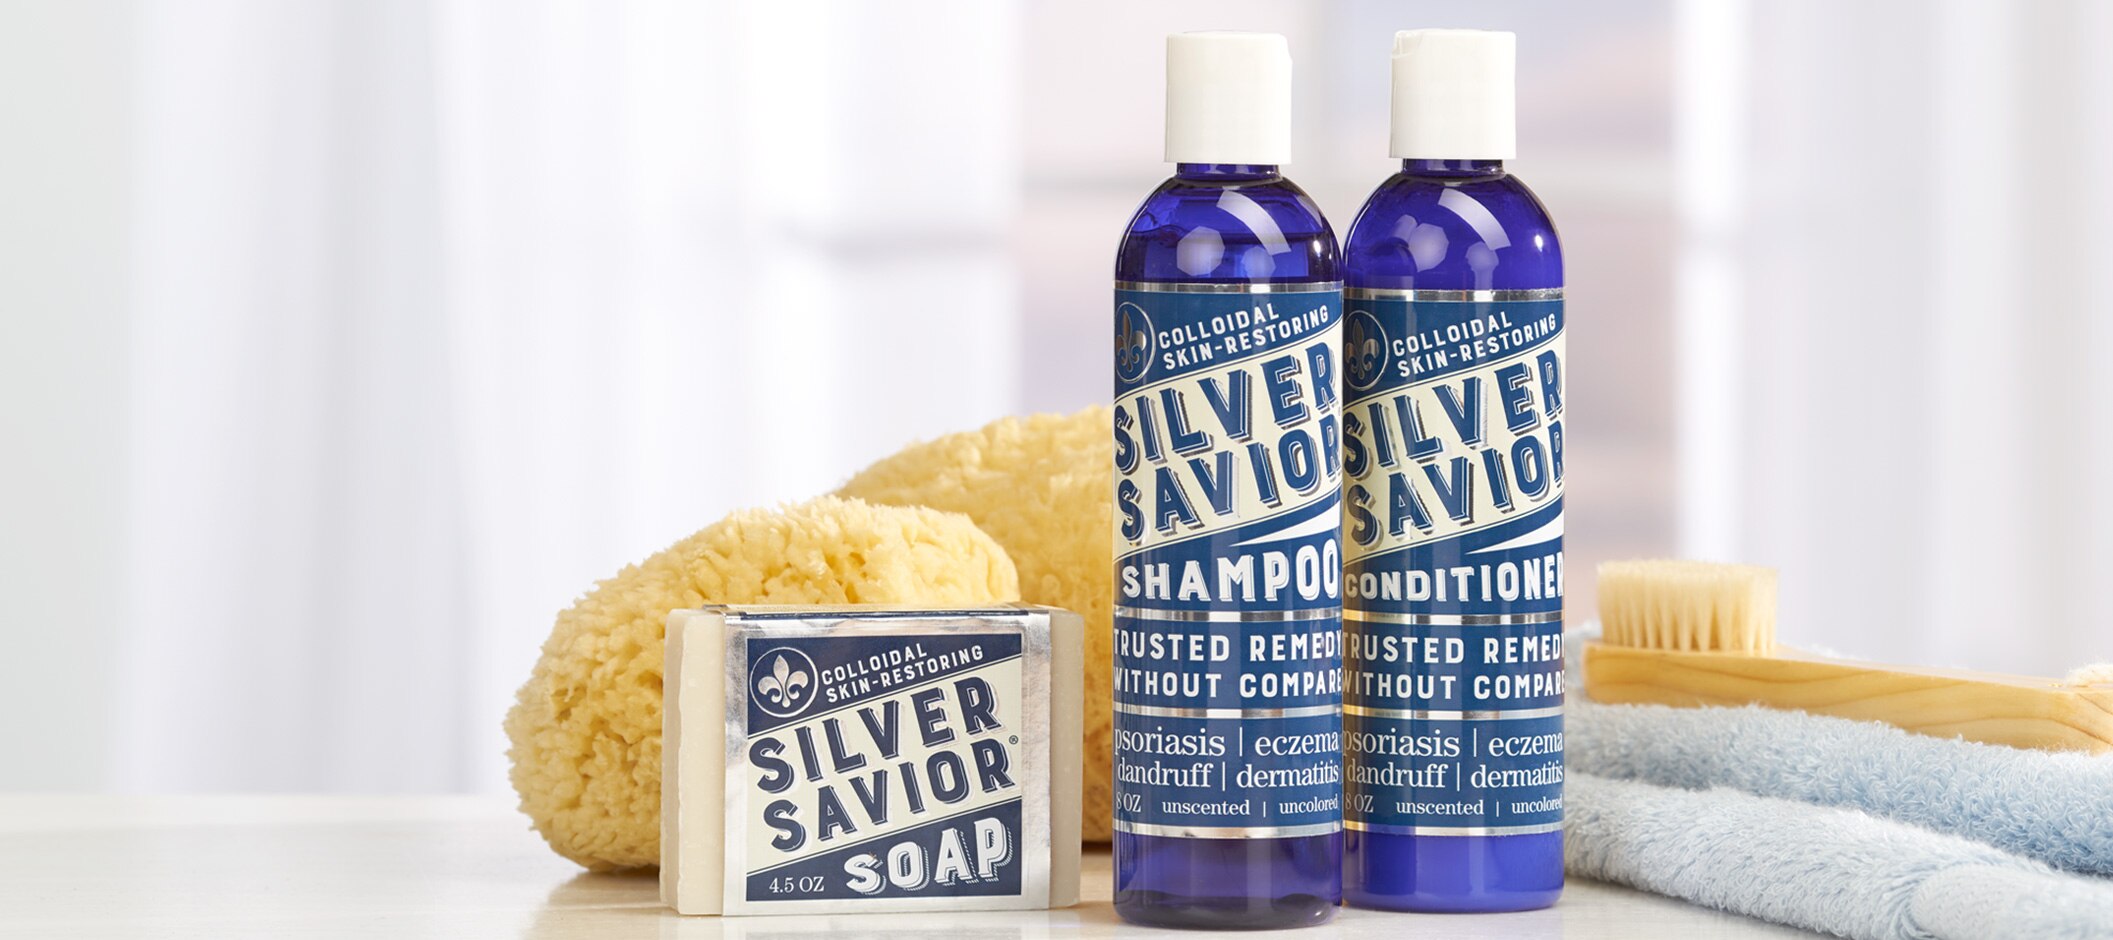 Silver Savior products